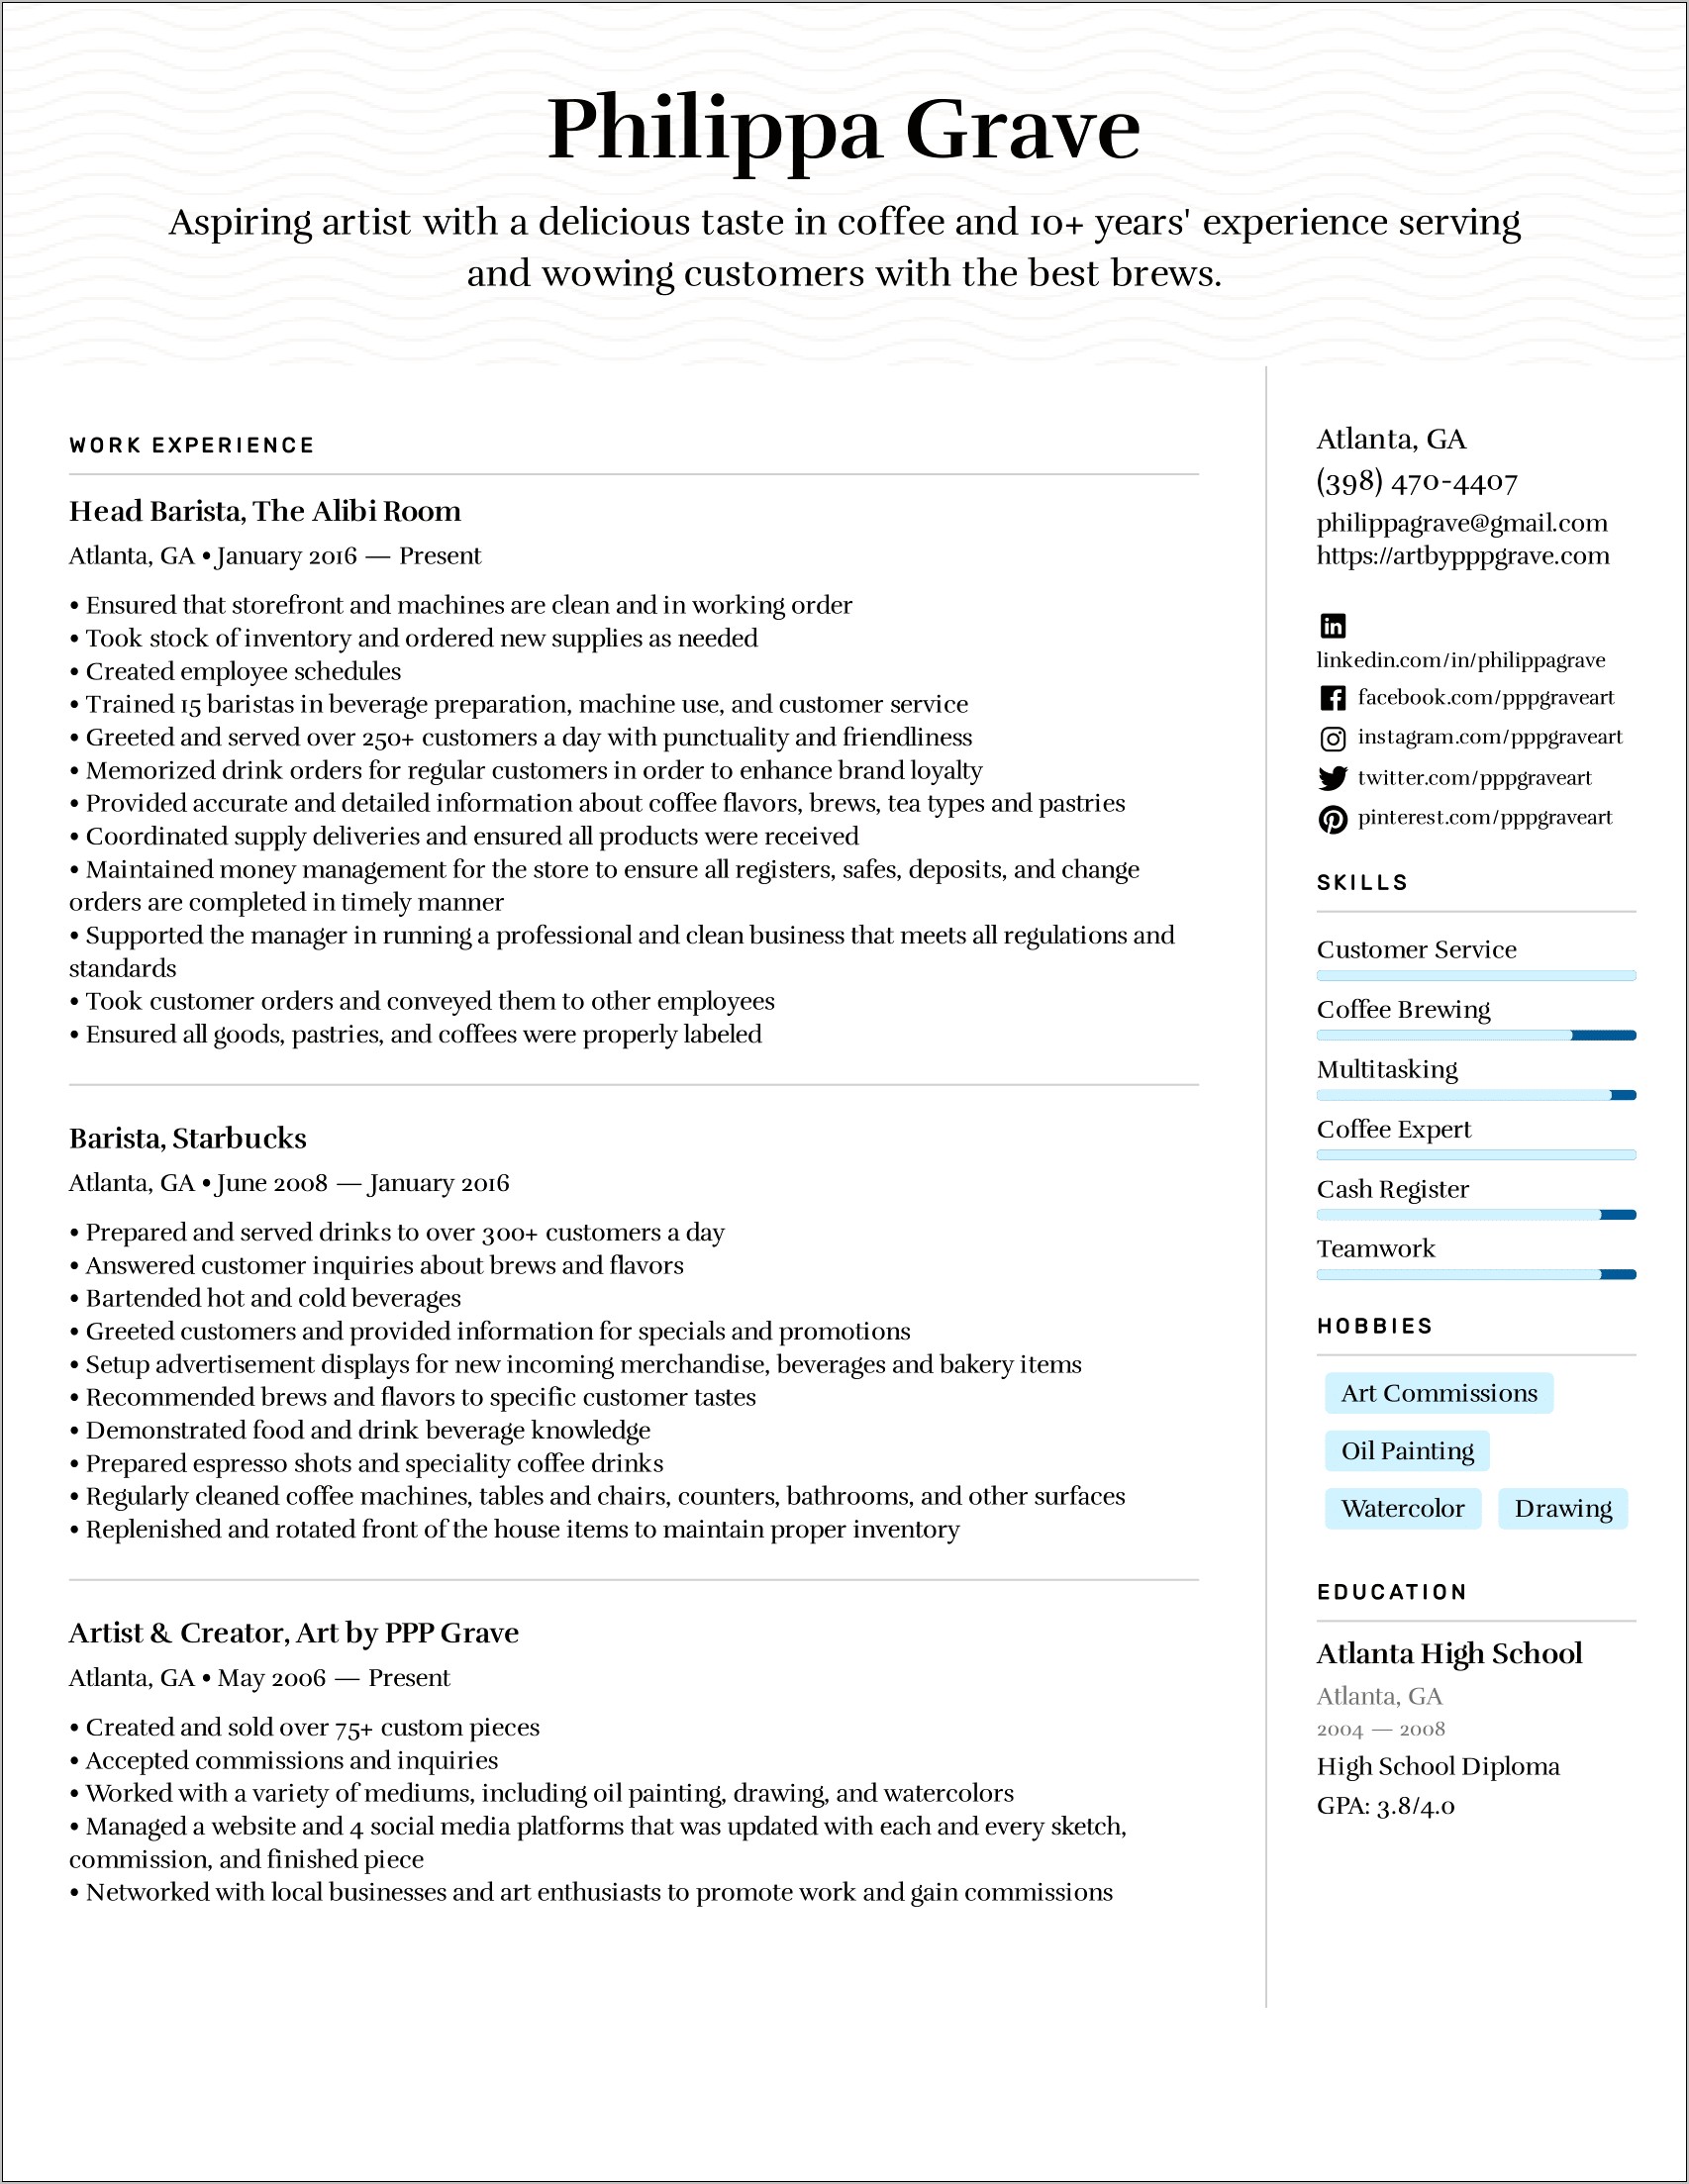 It Field Technician Resume Job Description